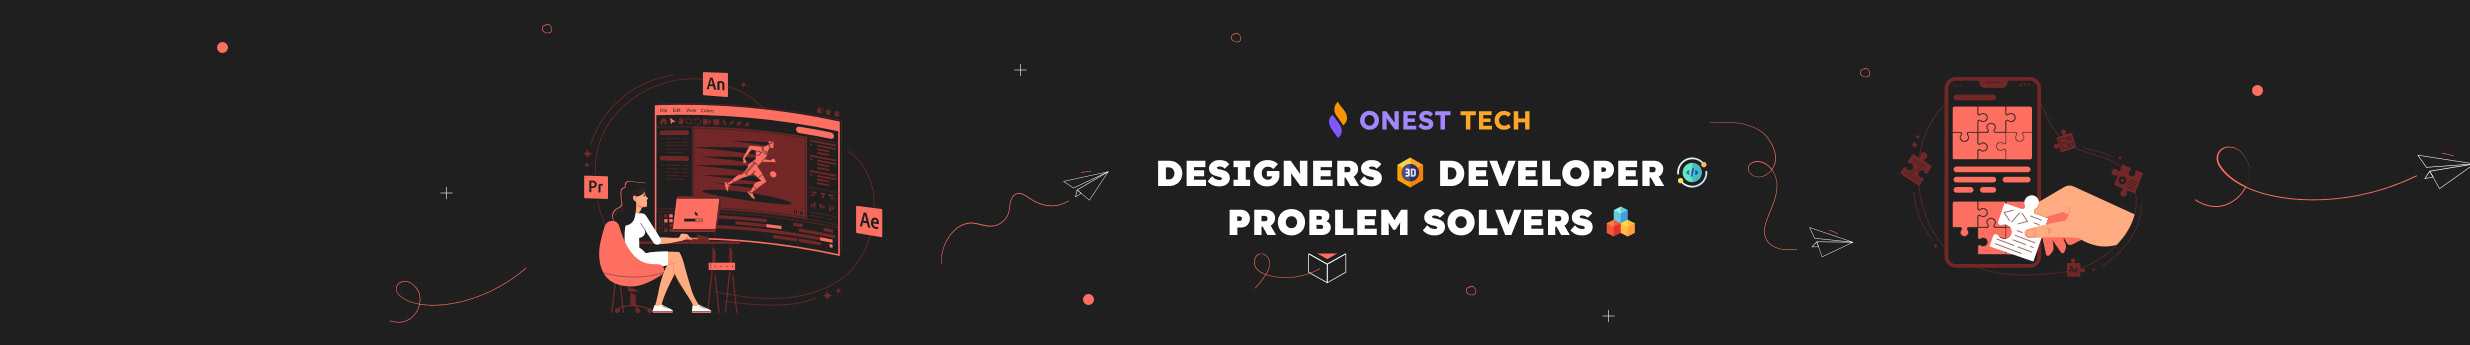 Onest Tech's profile banner